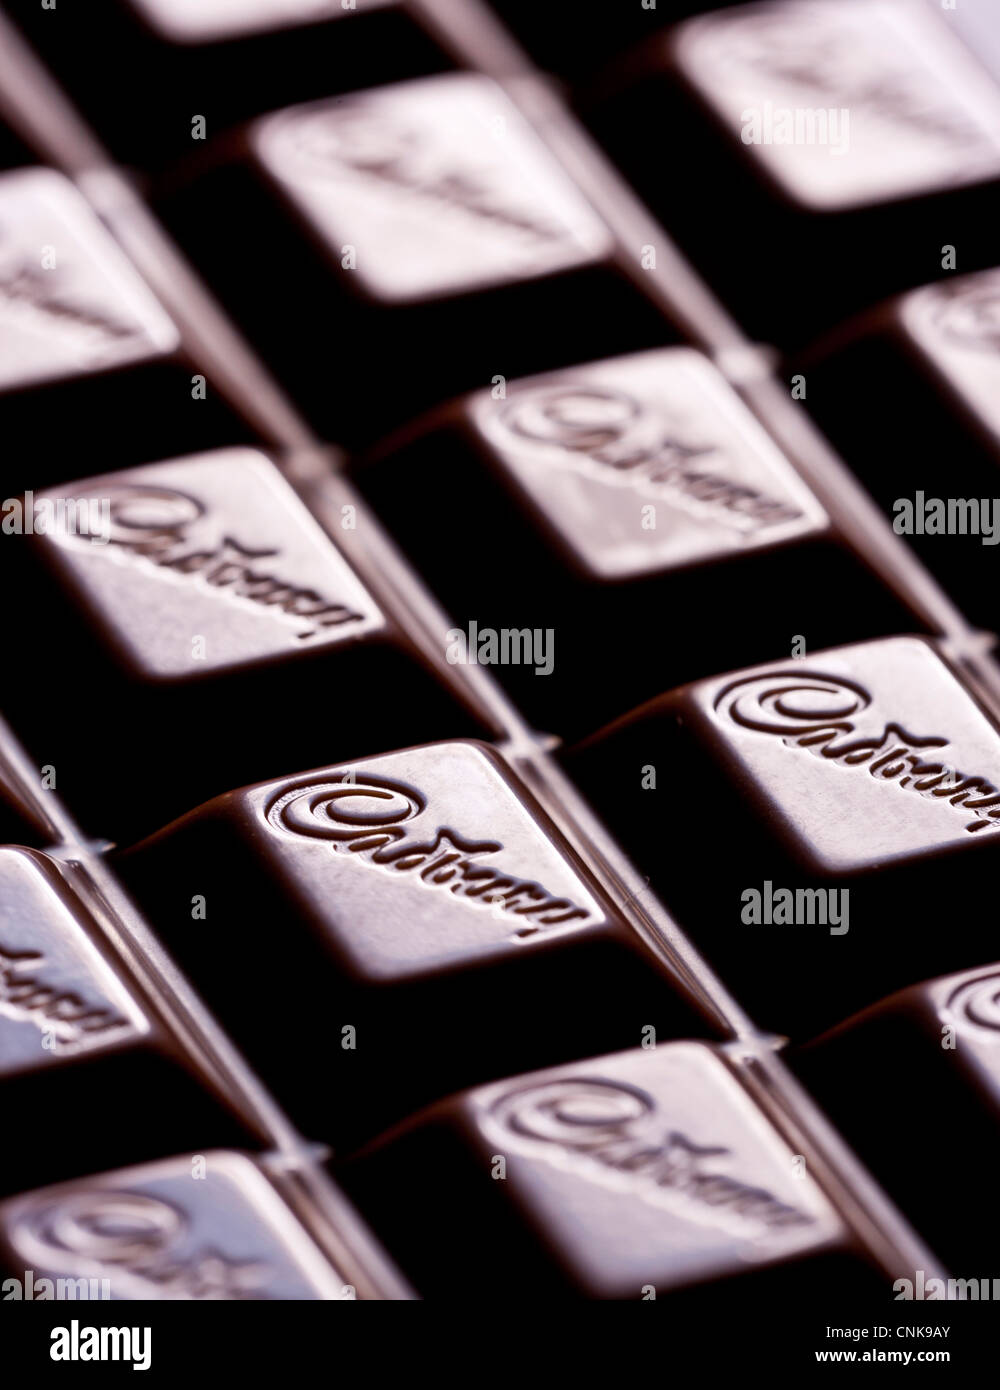 Cadbury milk chocolate bar Stock Photo